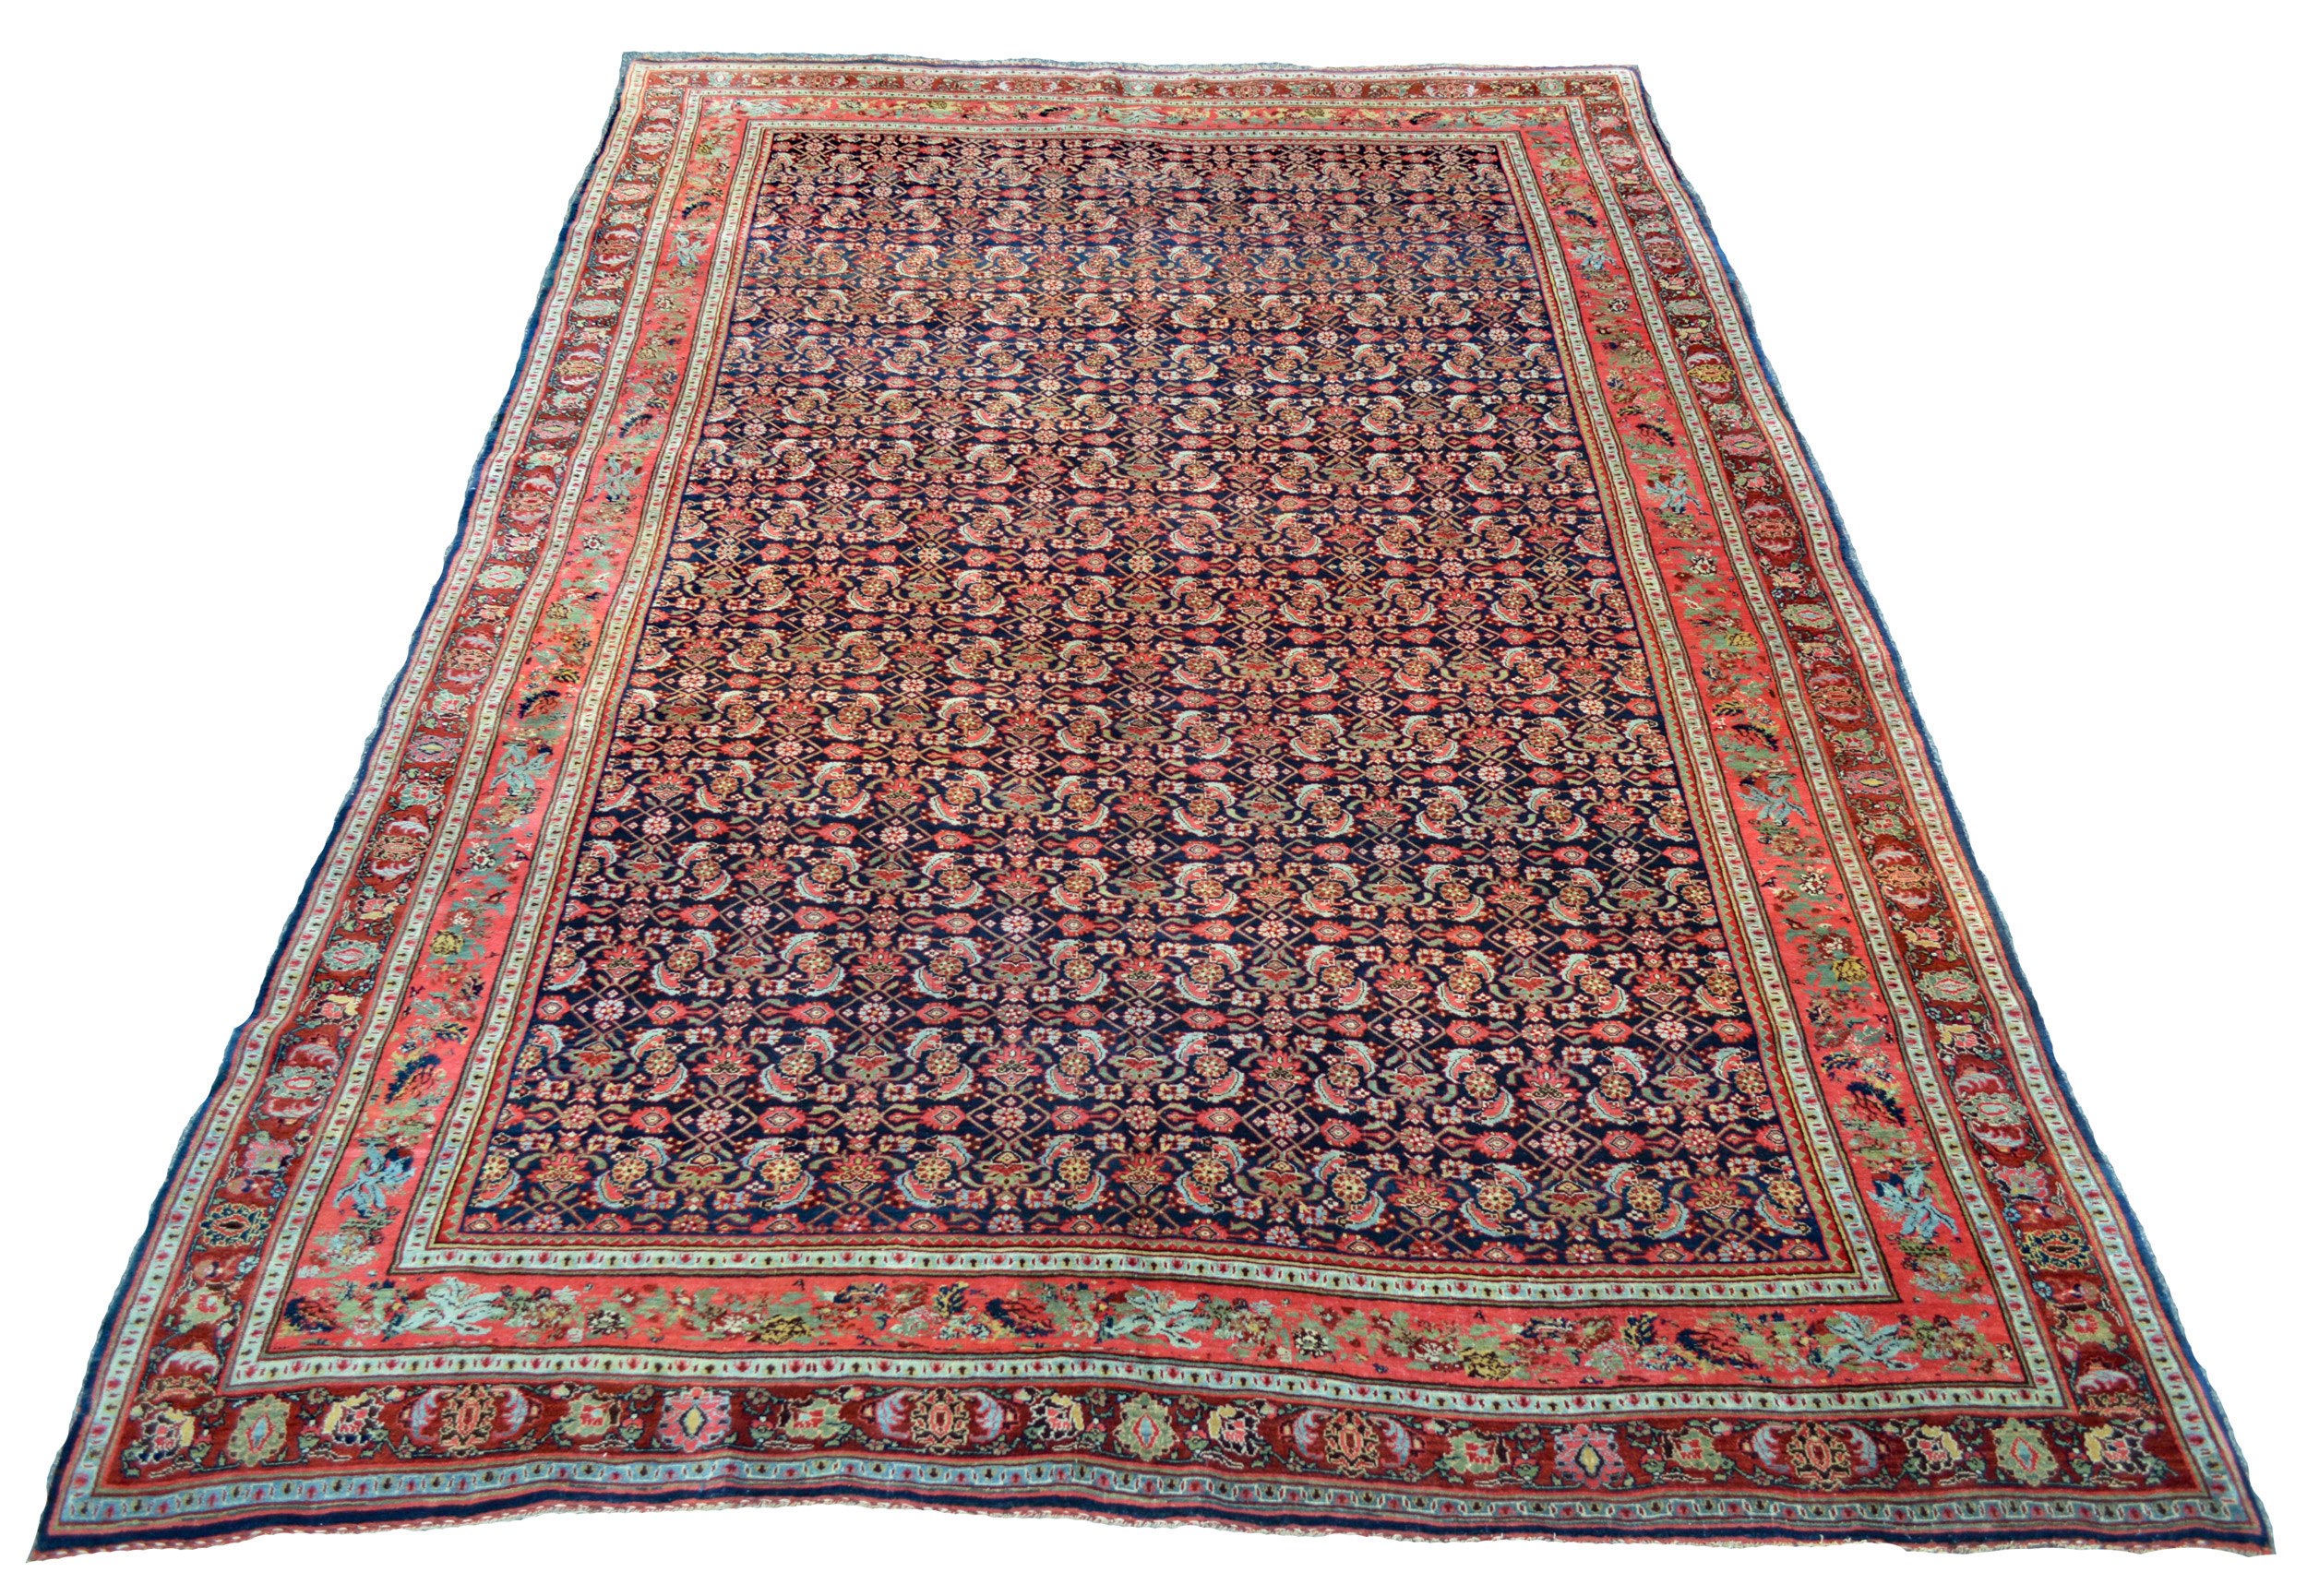 Antique Persian Bidjar carpet with the Herati design on a navy field, northwest Persia, circa 1900 - Douglas Stock Gallery antique carpets Boston,MA area